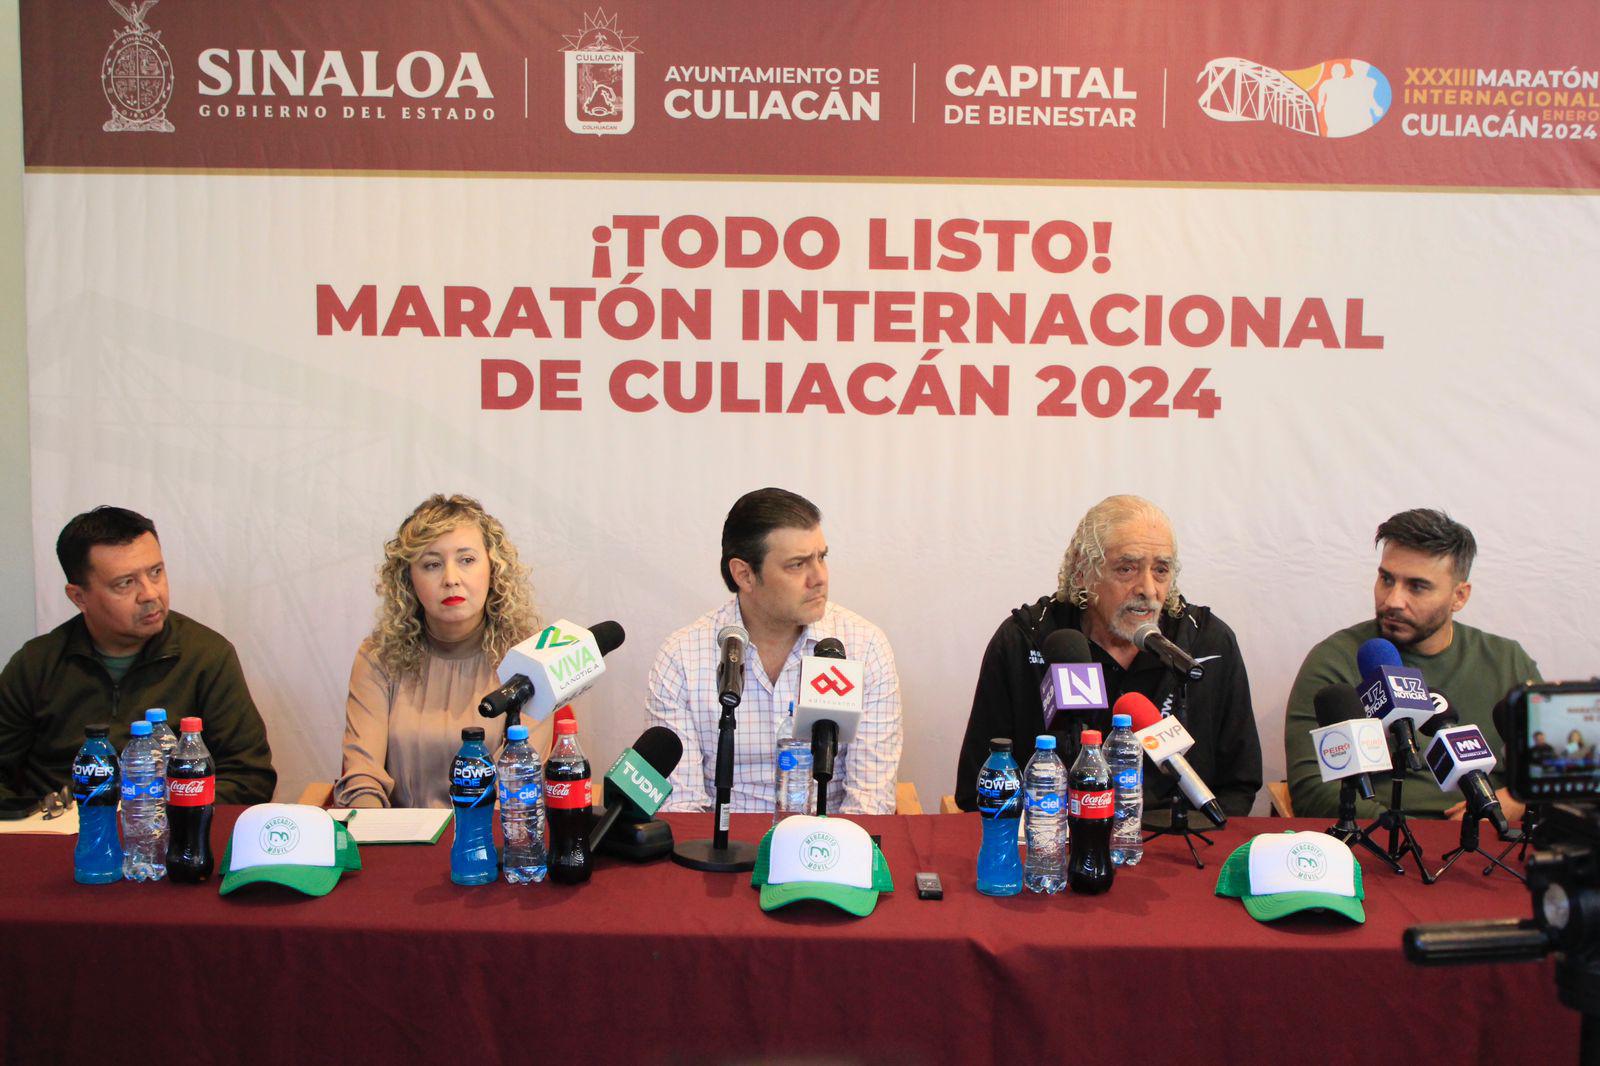 $!Todo listo para el Maratón Internacional de Culiacán 2024: organizadores